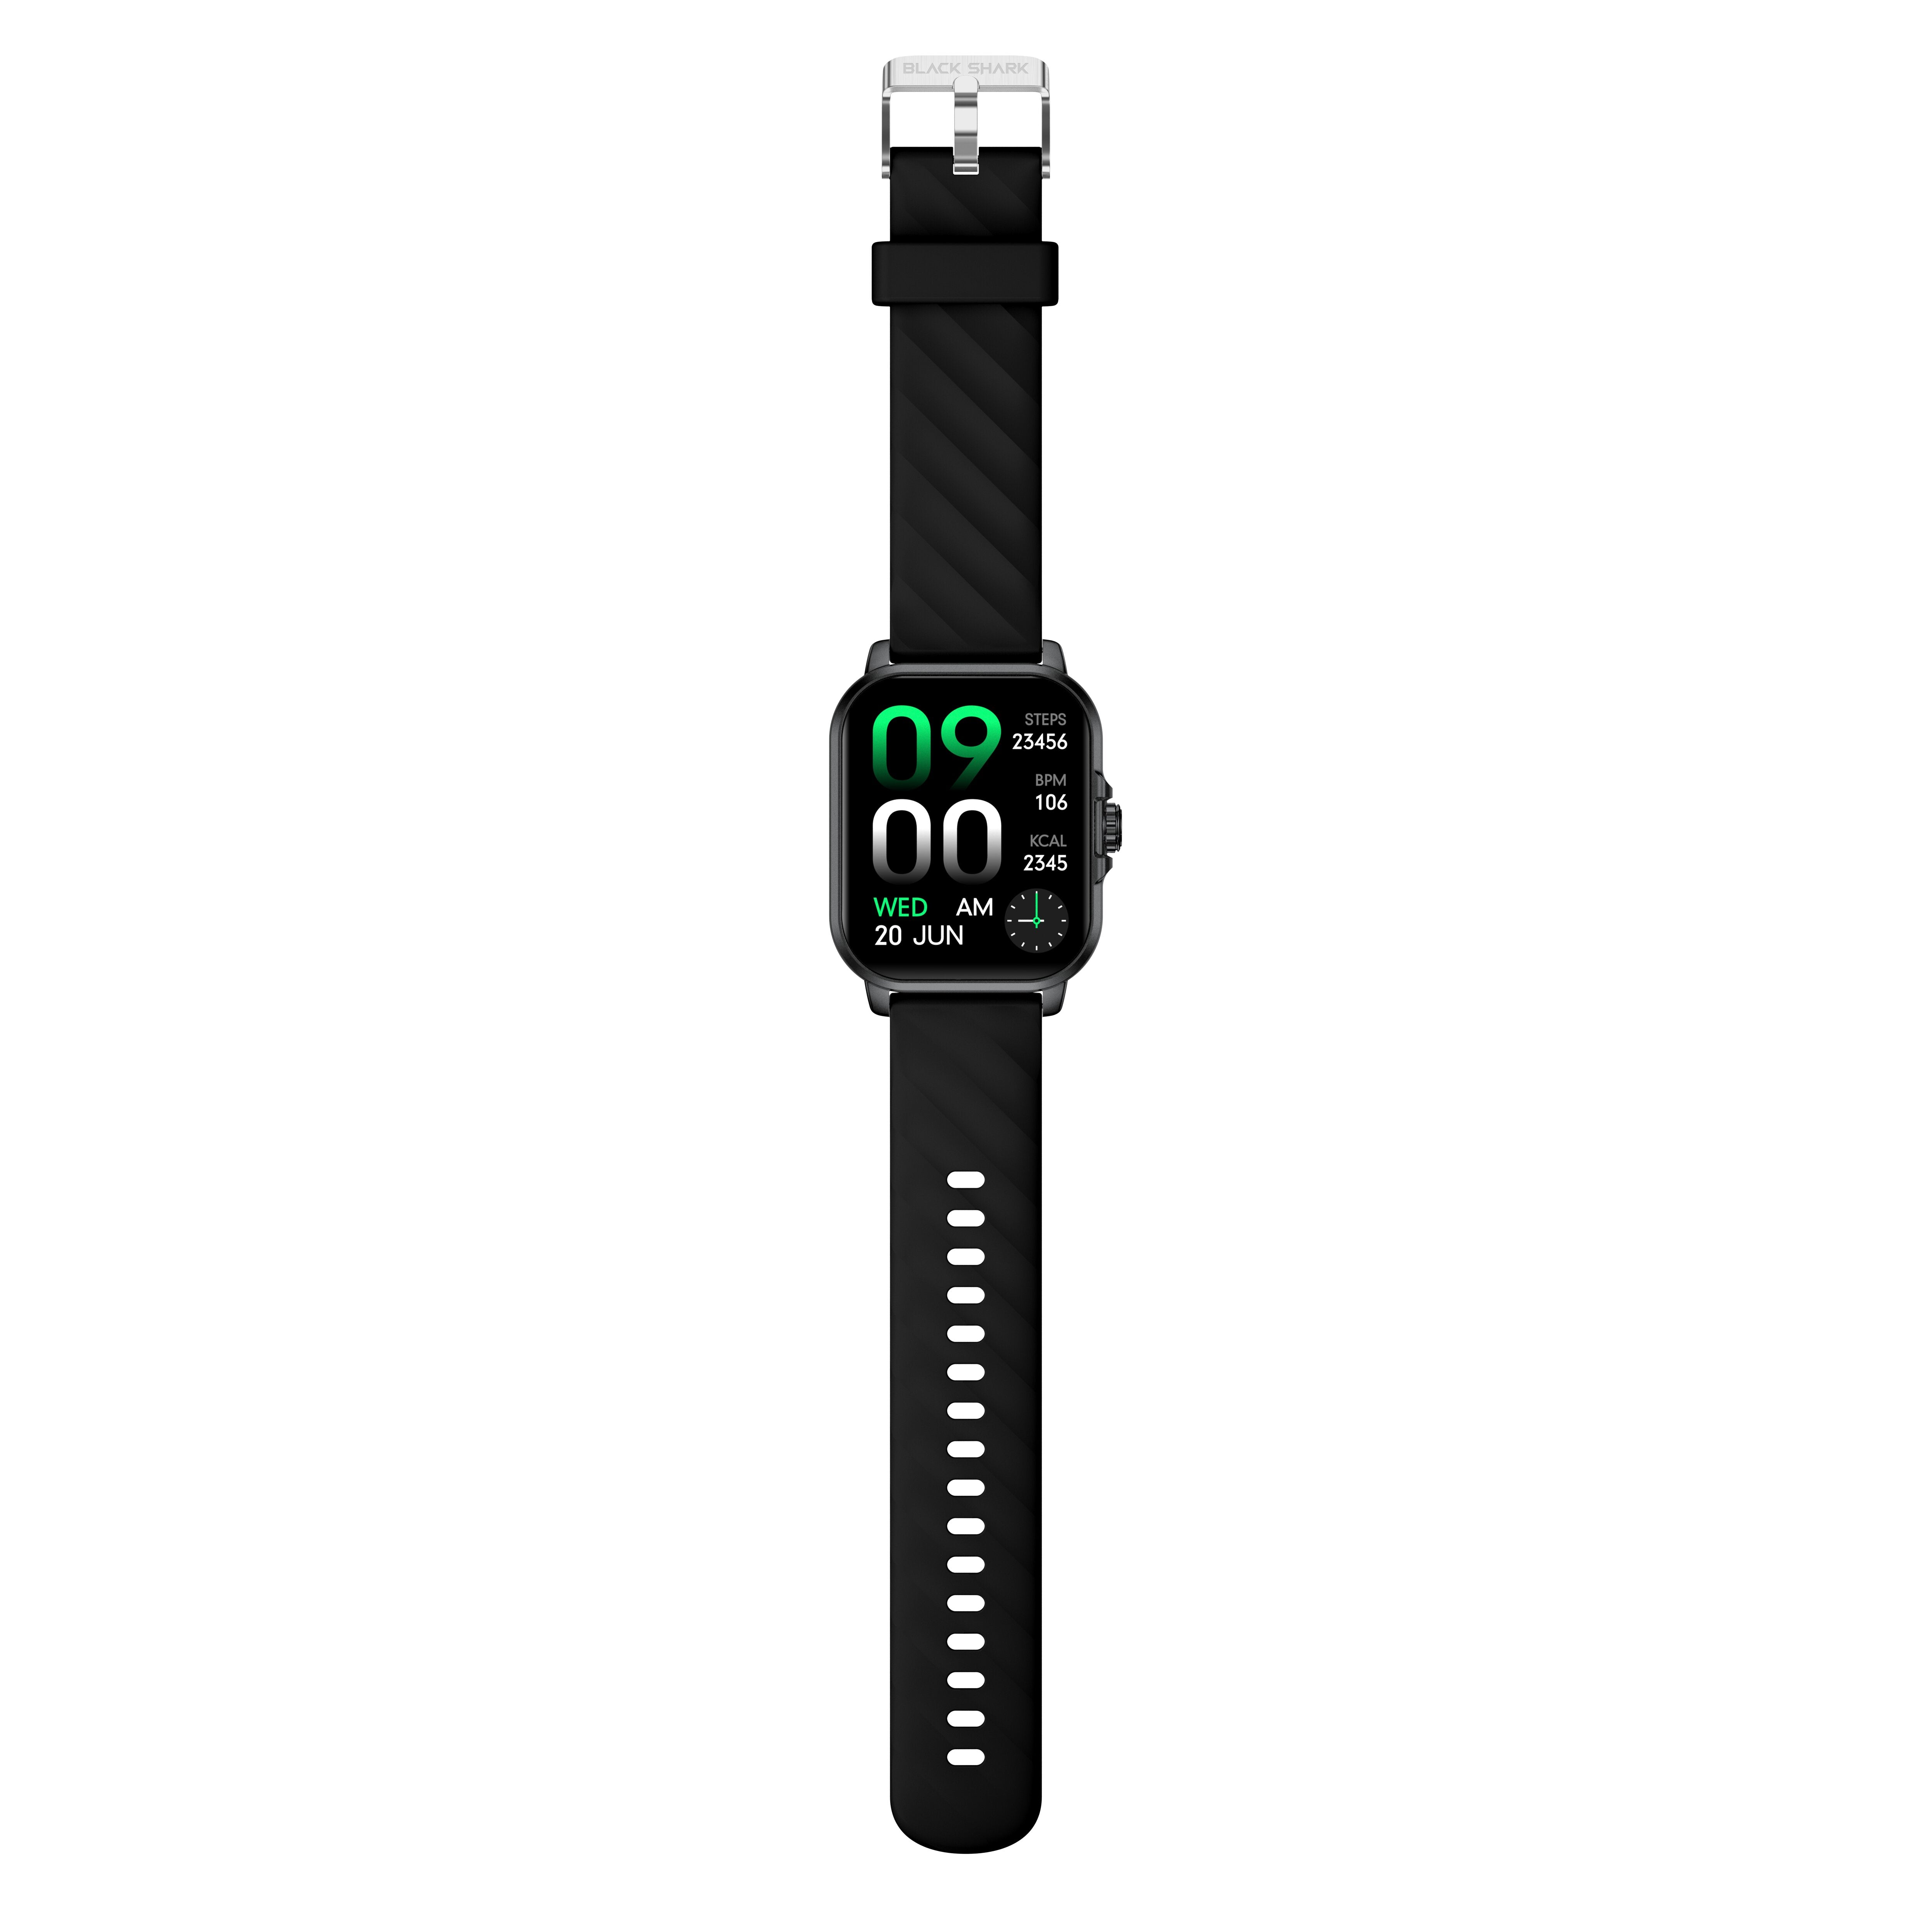 Black Shark GT Neo Smart Watch - Black